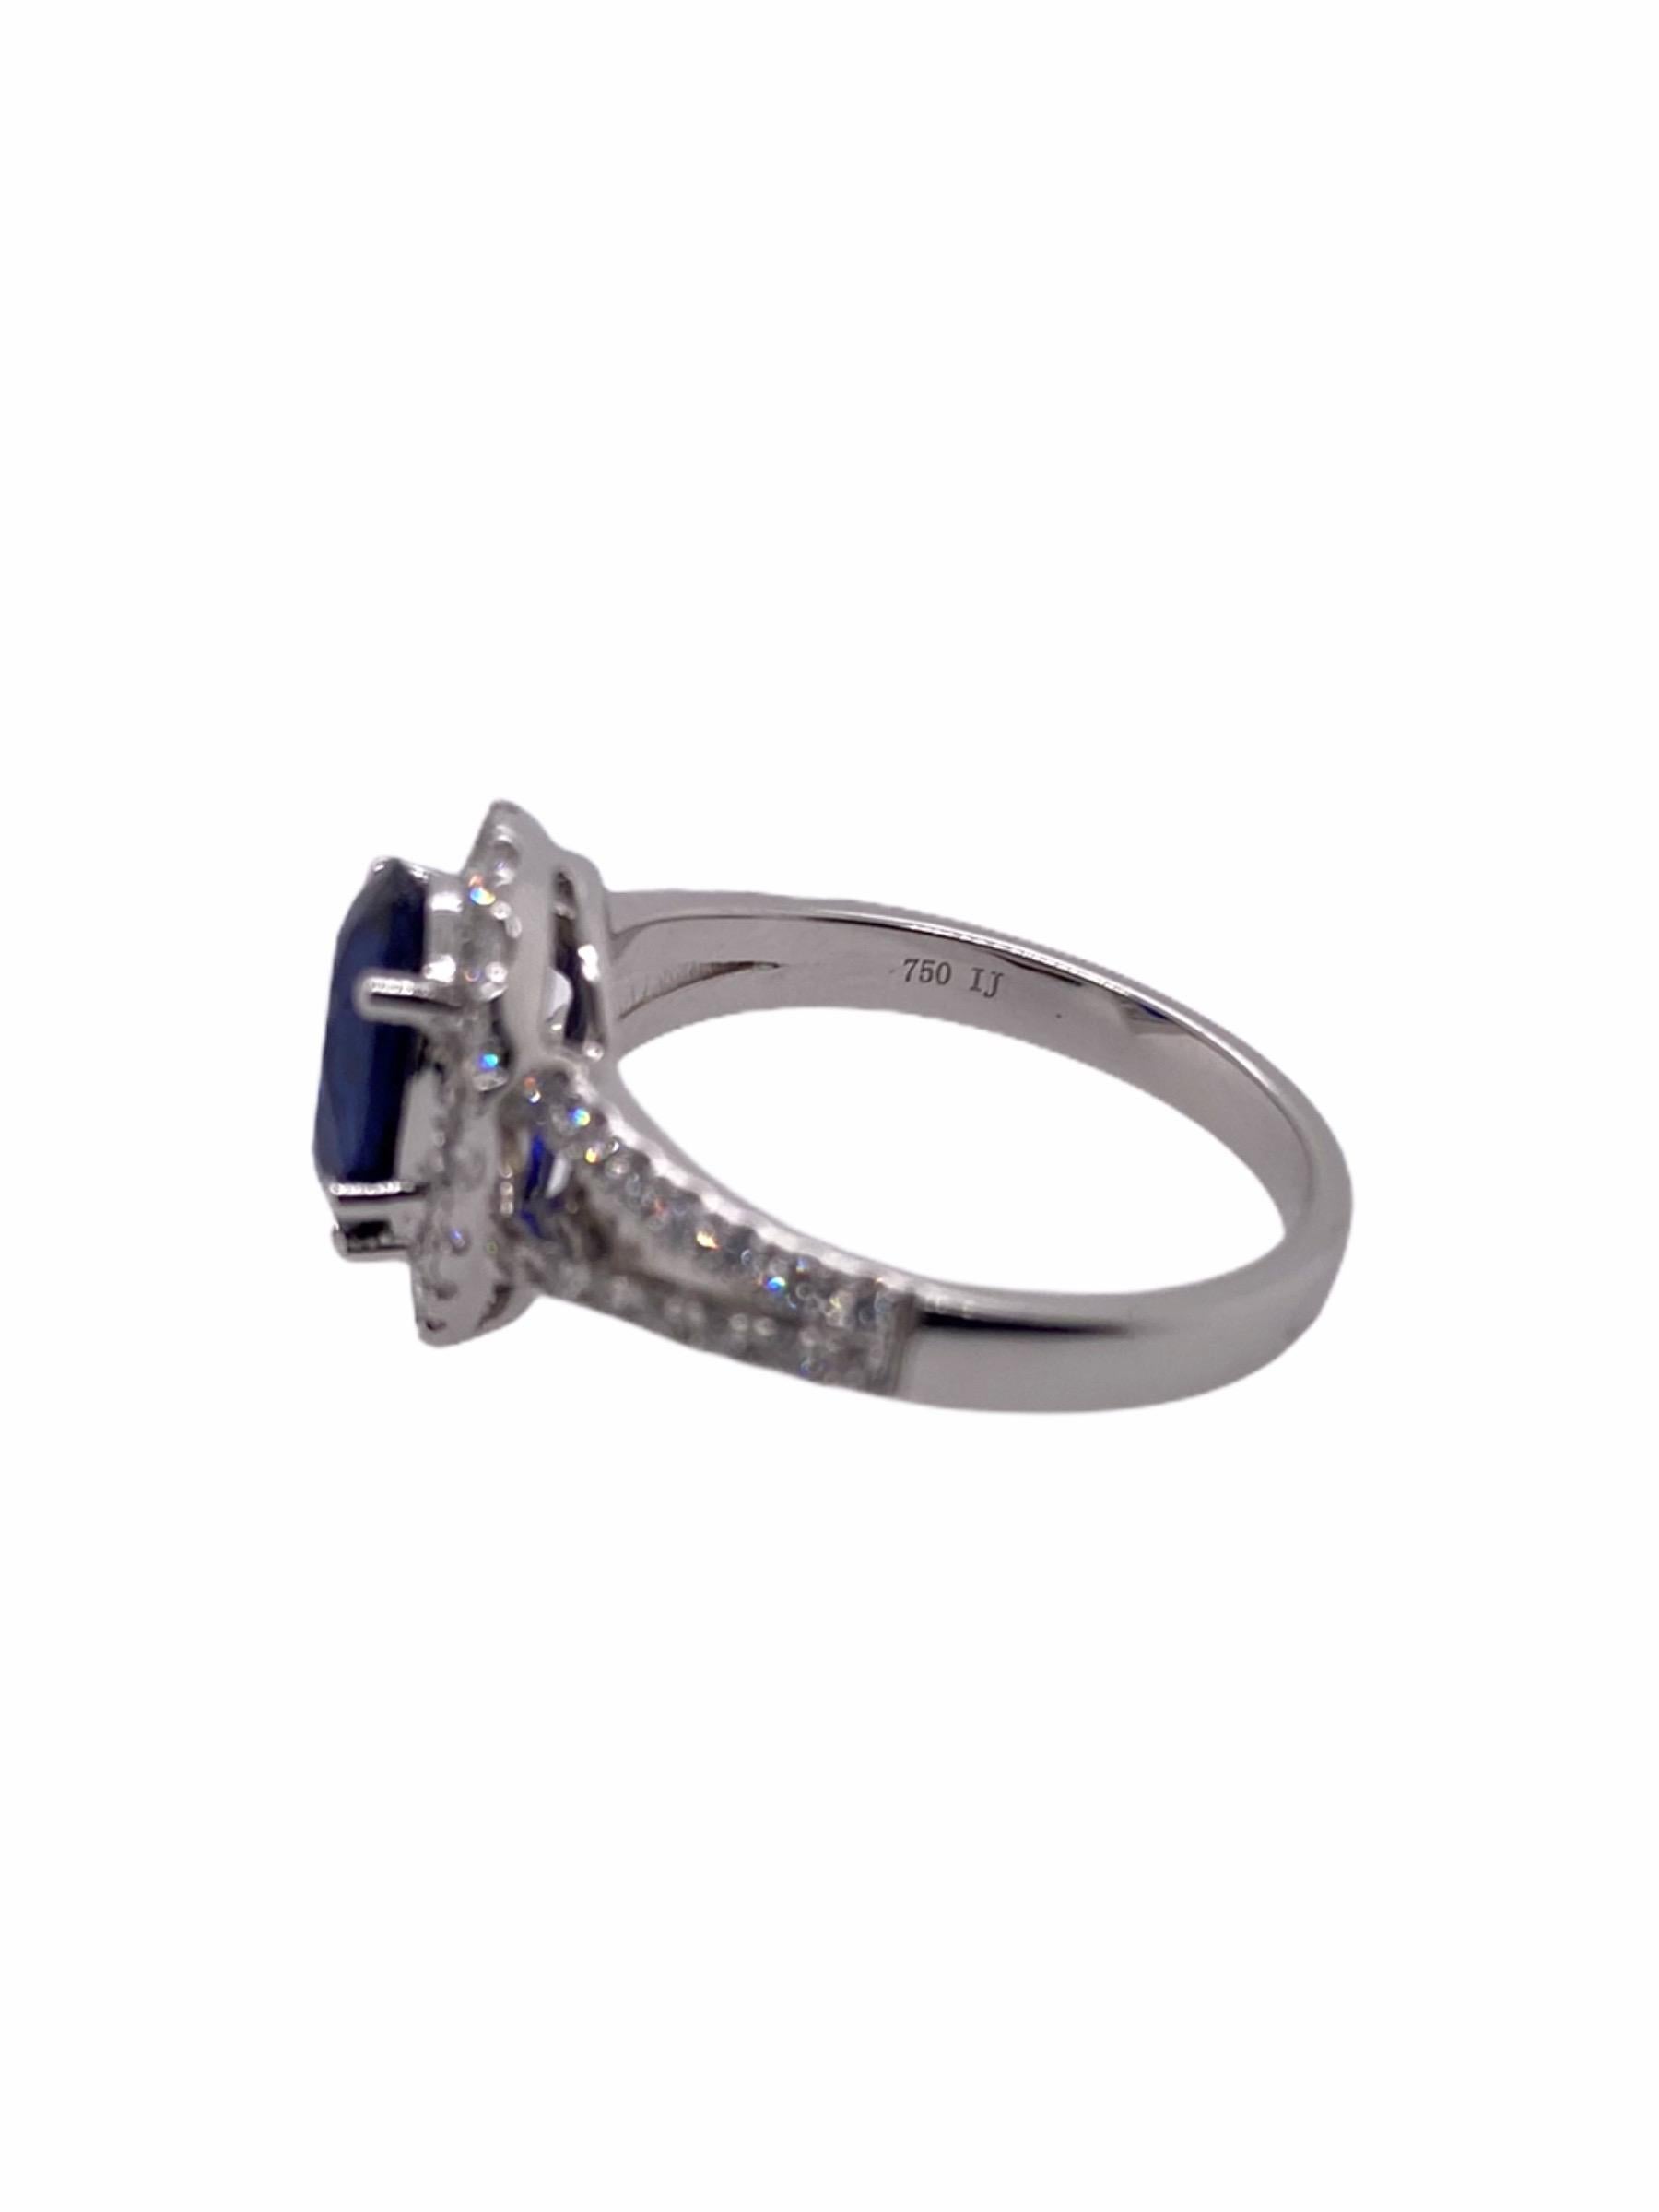 Modern Paris Craft House 1.90ct Royal Blue Sapphire Diamond Ring in 18 Karat Gold For Sale